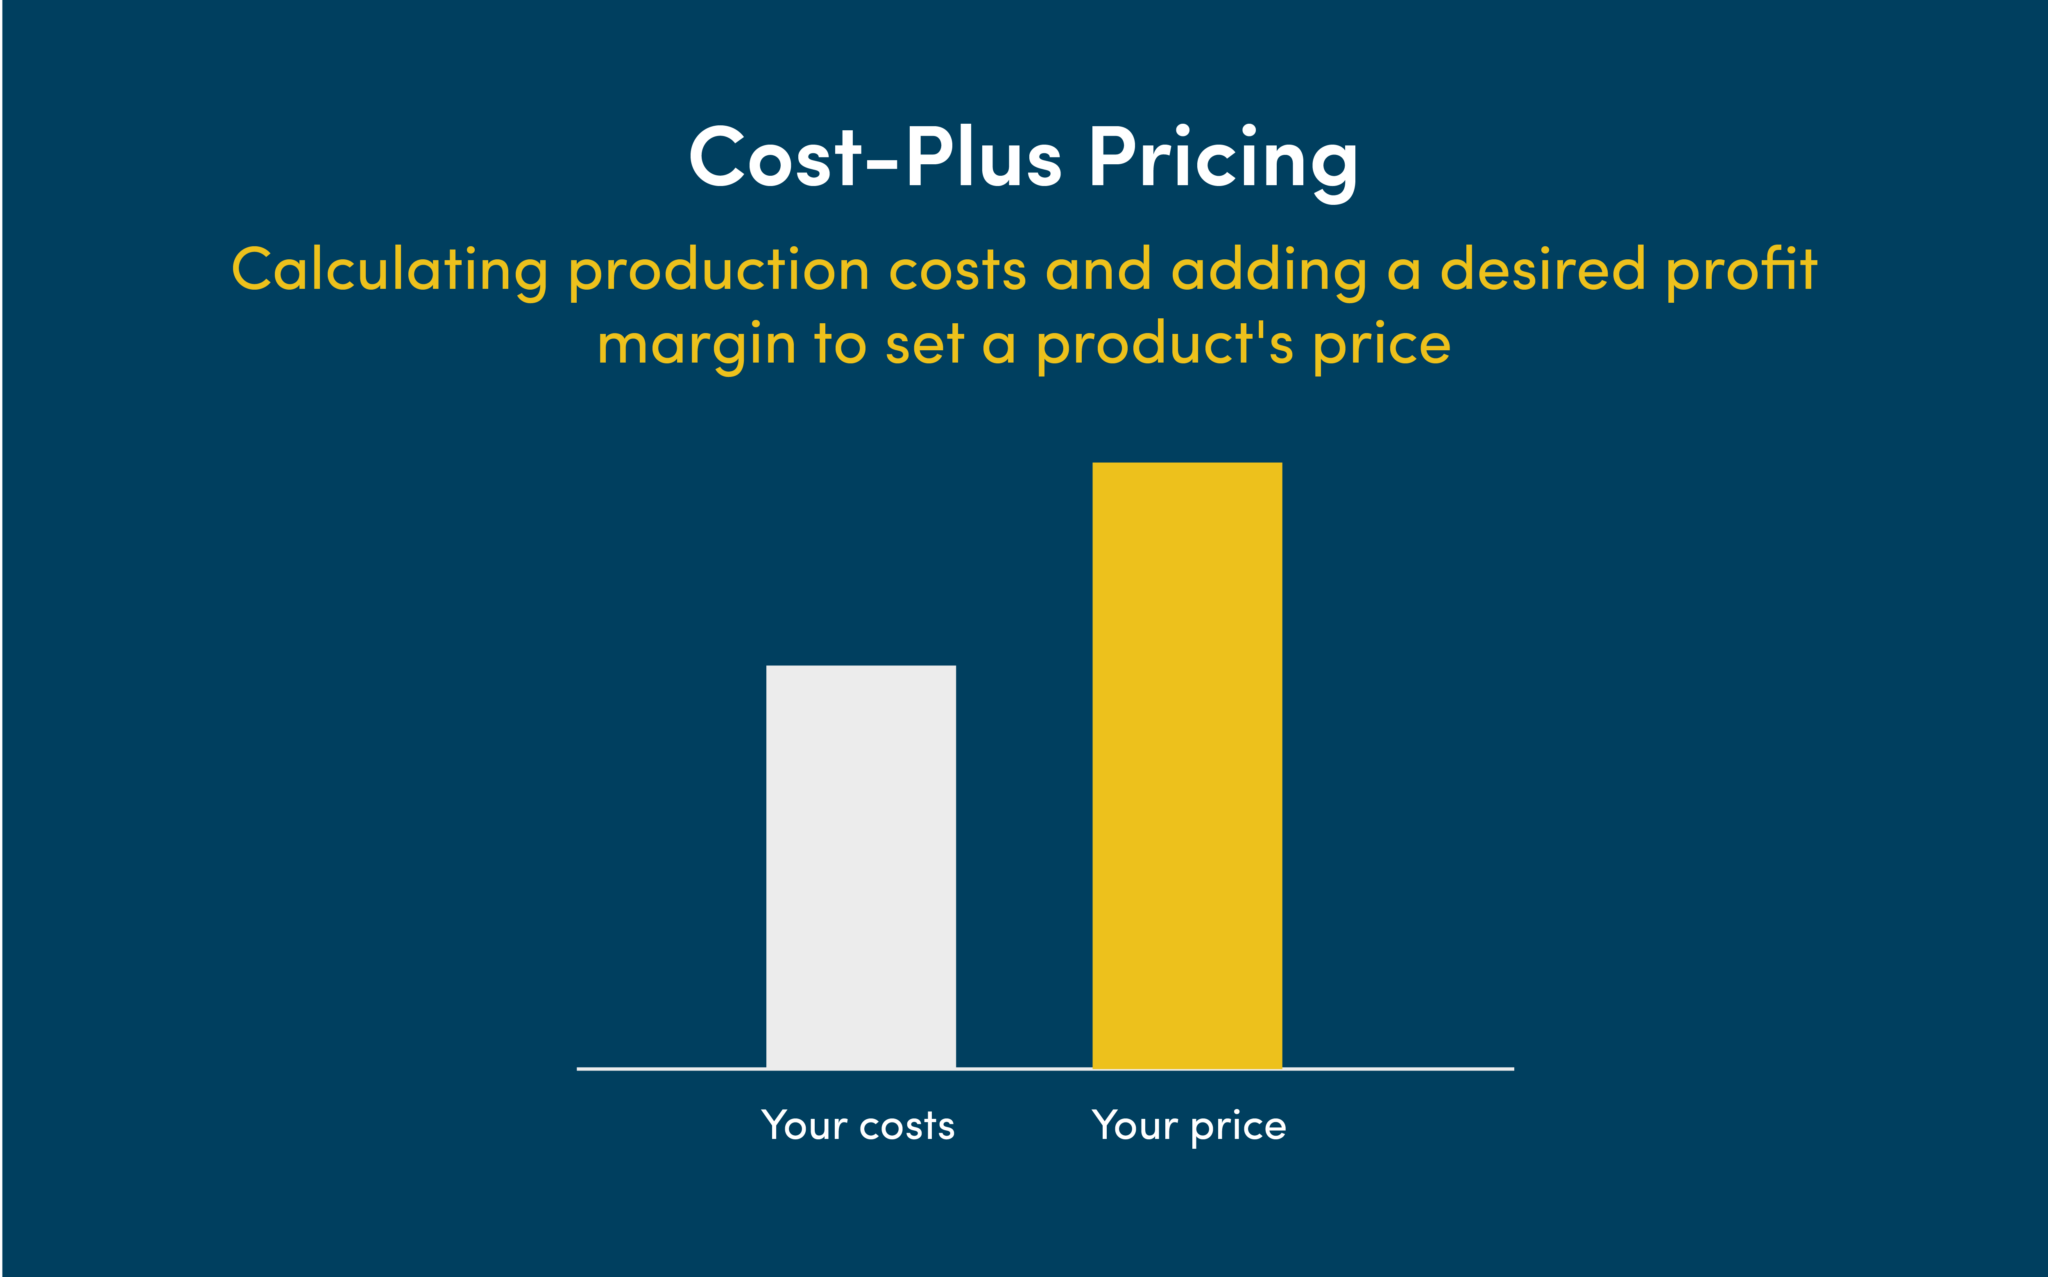 Cost-plus pricing